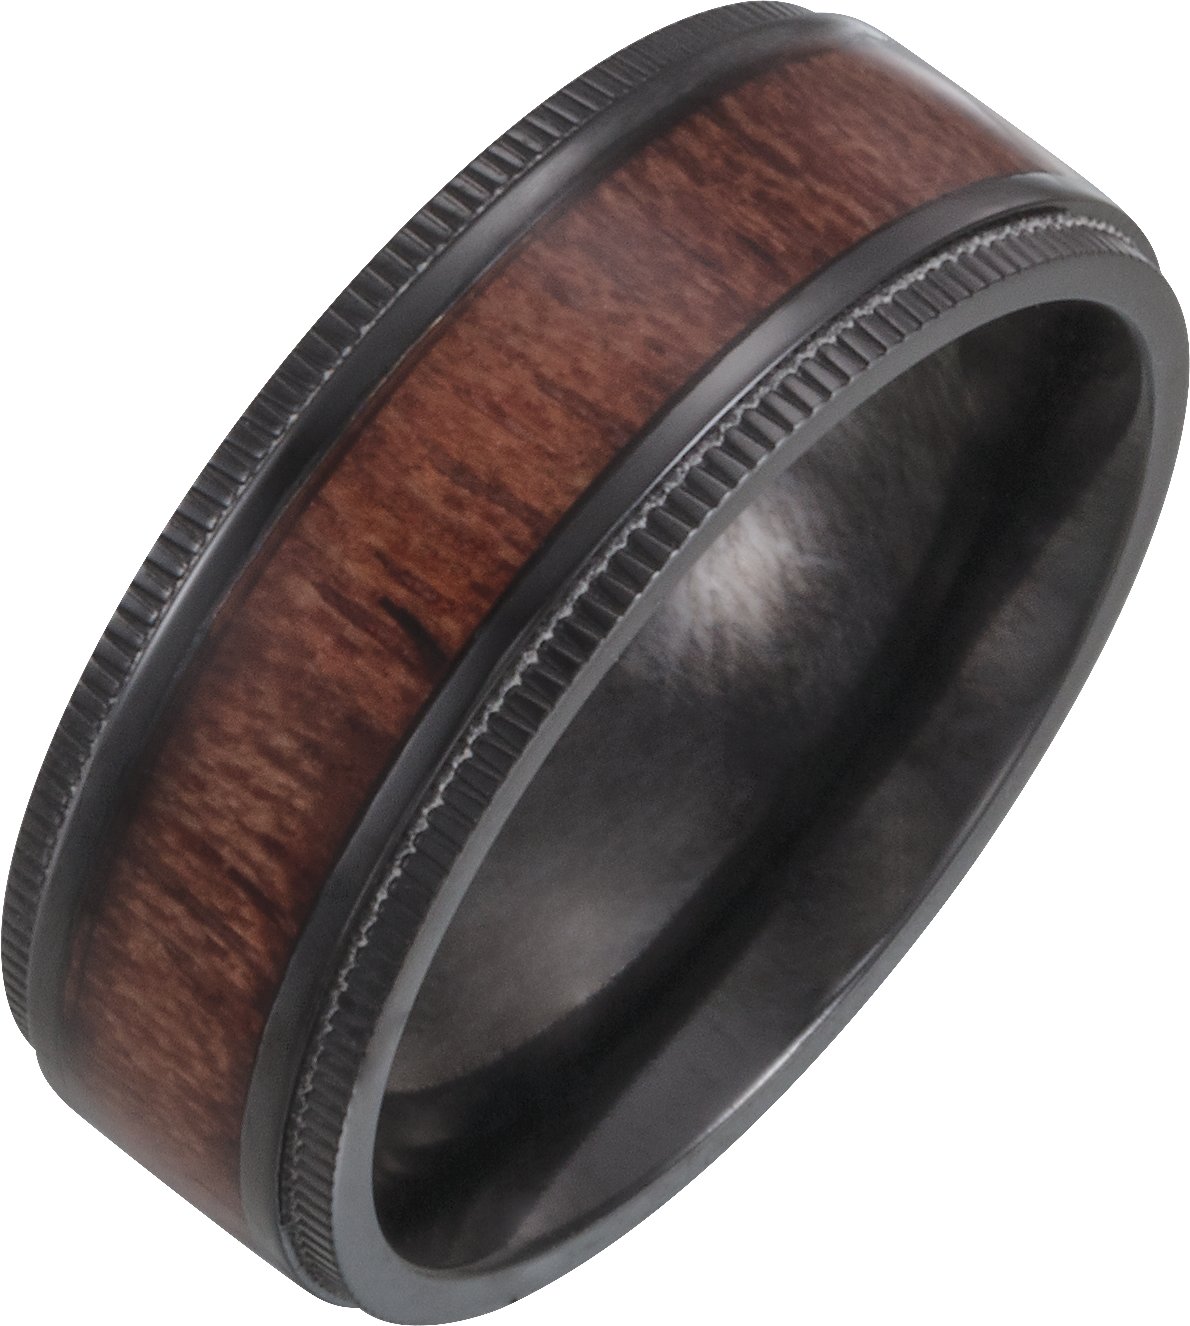 Black Titanium 8 mm Beveled Edge Band with Wood Inlay Size 13.5 Ref 16120562